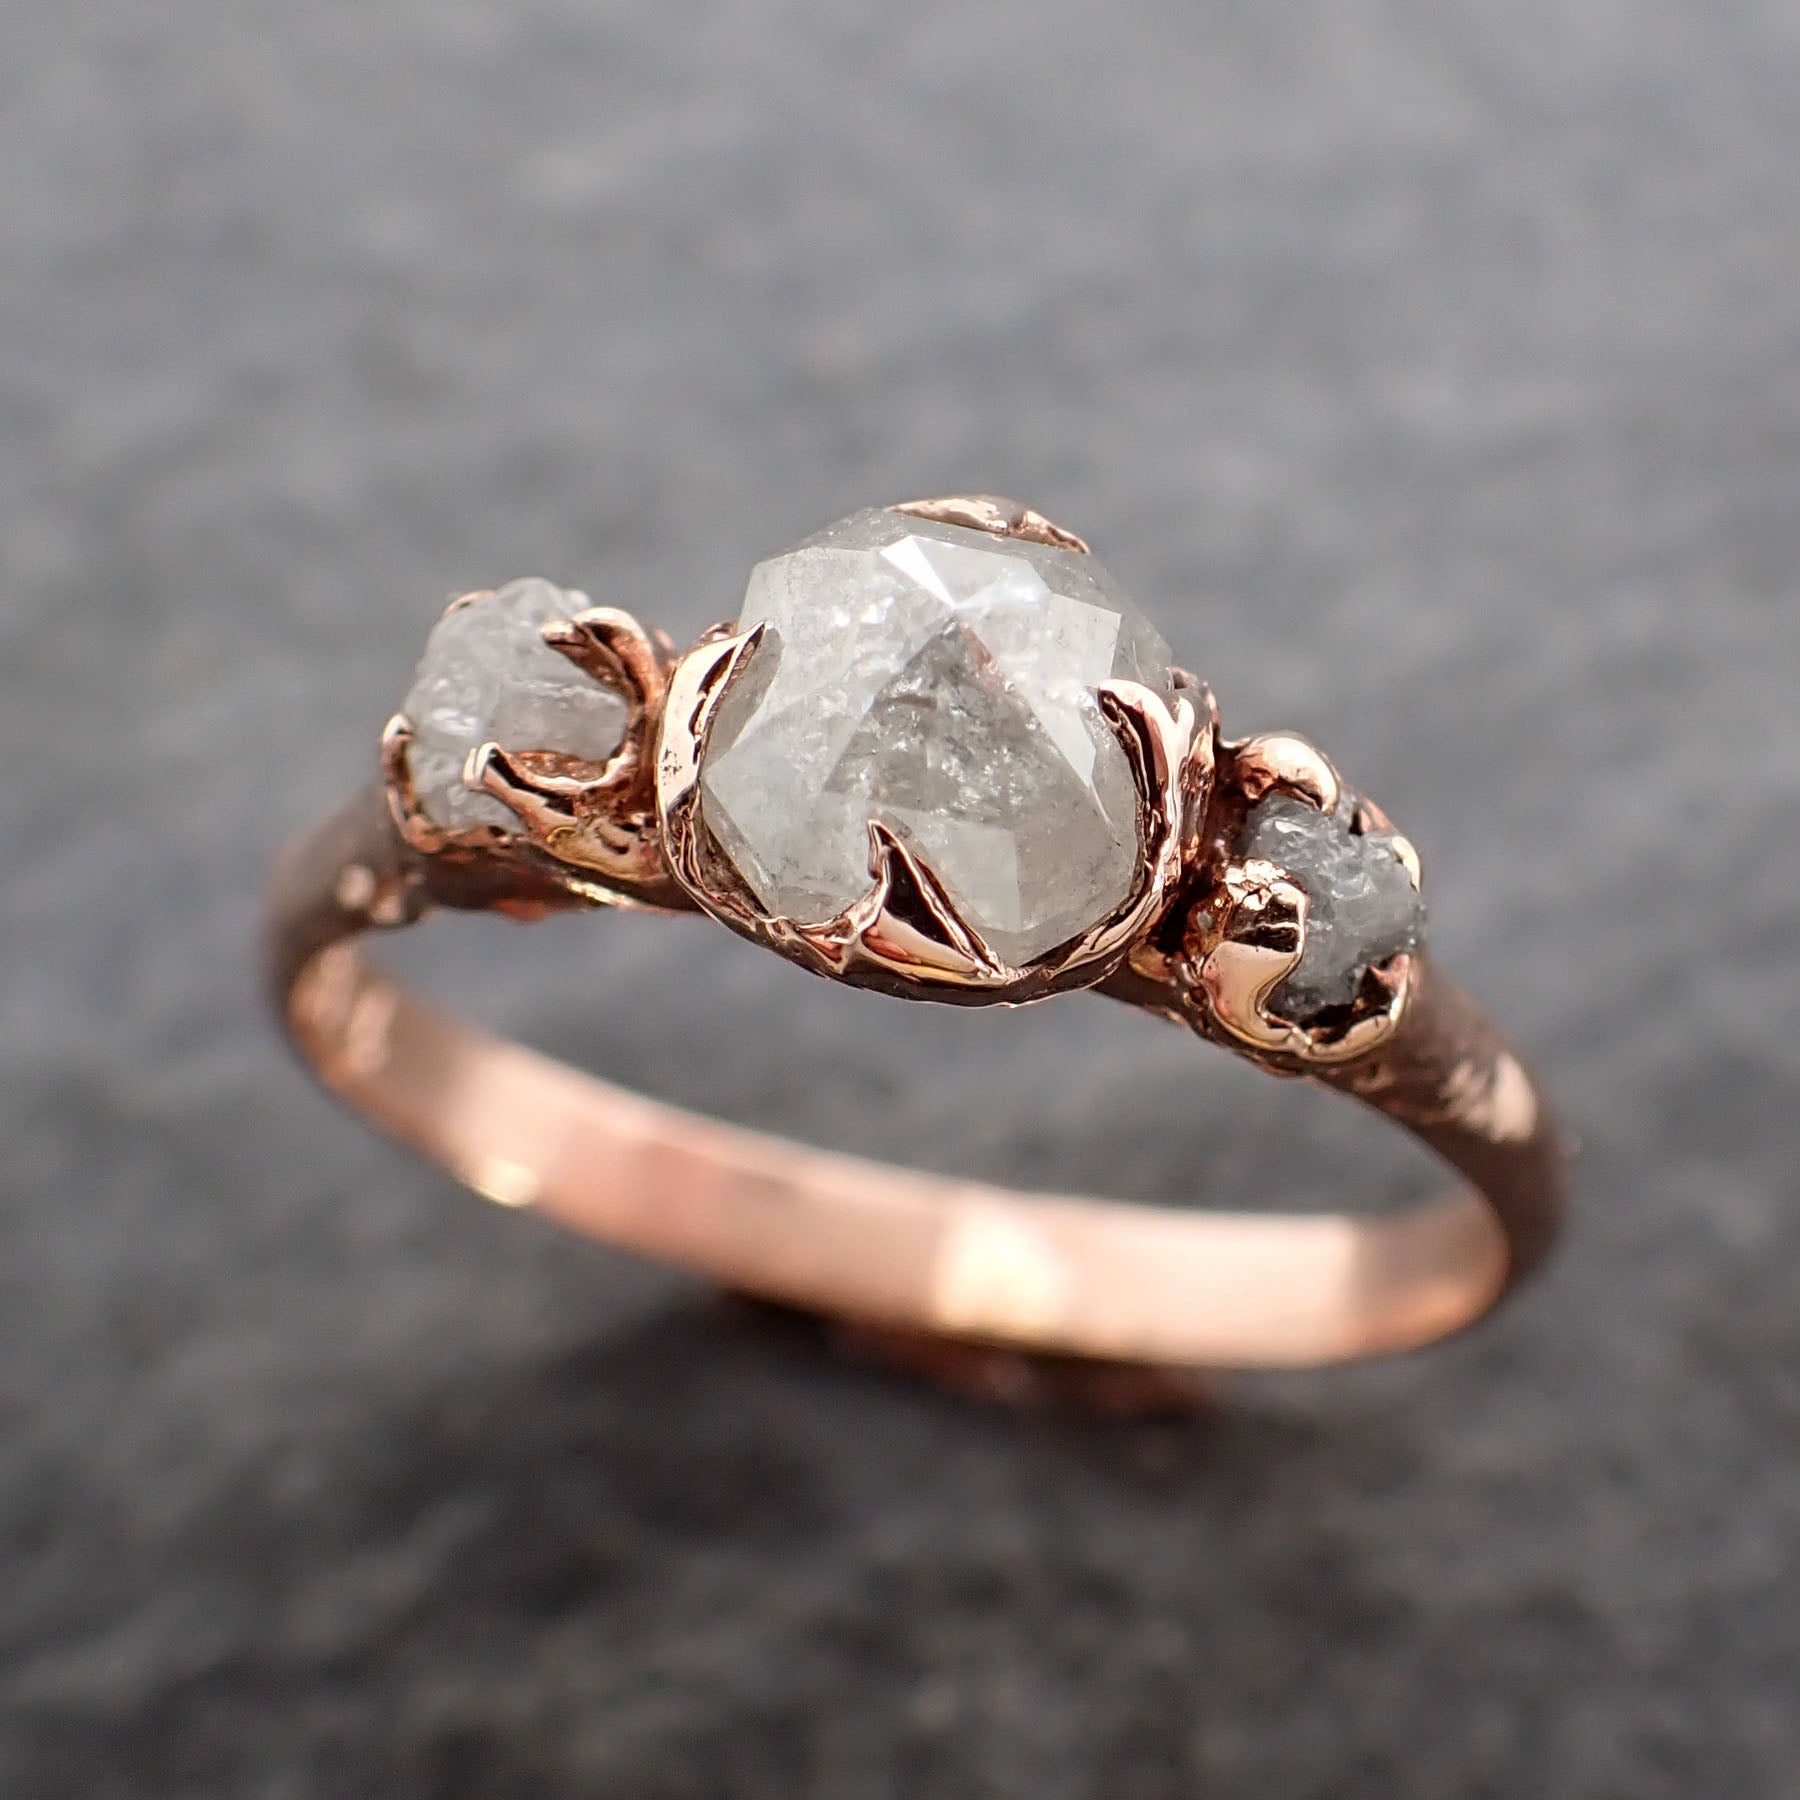 Fancy cut white Diamond Engagement 14k Rose Gold Multi stone Wedding Ring Stacking Rough Diamond Ring byAngeline 2565